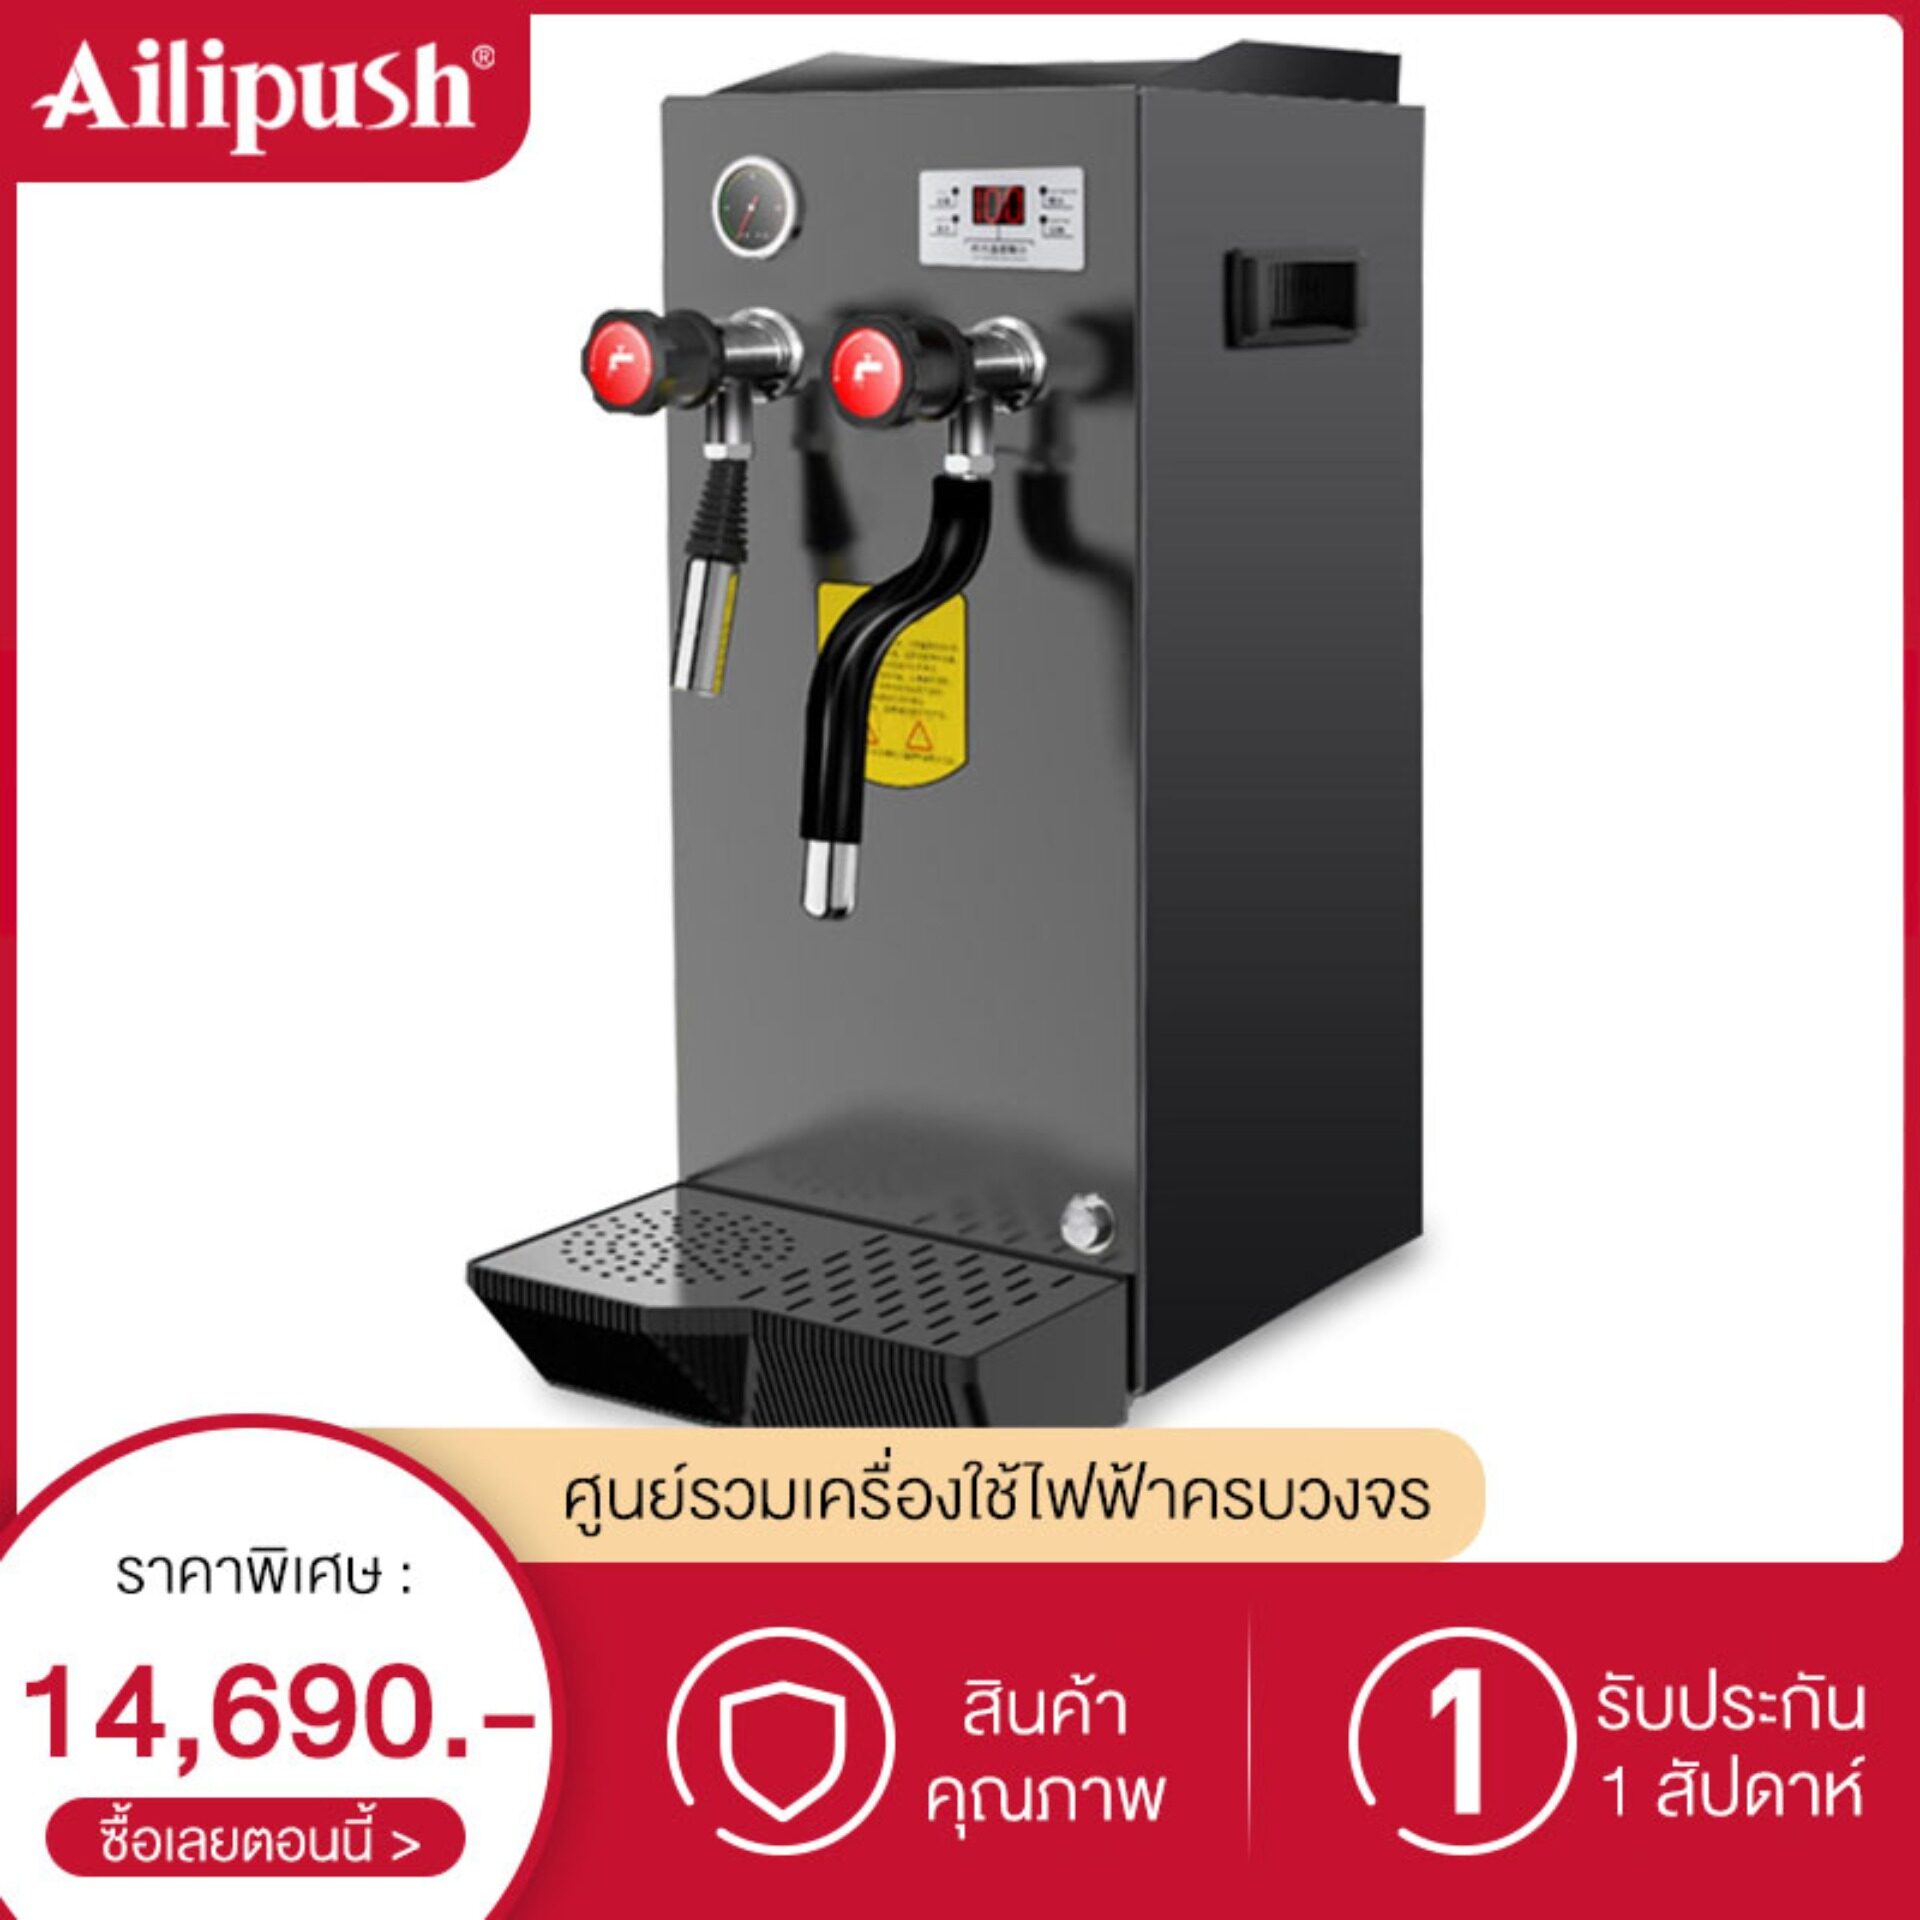 Ailipush เครื่องจ่ายน้ำร้อนชงชาใหม่พร้อมไอน้ำและน้ำเดือด เครื่องตีฟองนมสำหรับกาแฟนมในเชิงพาณิชย์ Water dispenser with tea and steam and boiling water Milk frother for commercial coffee